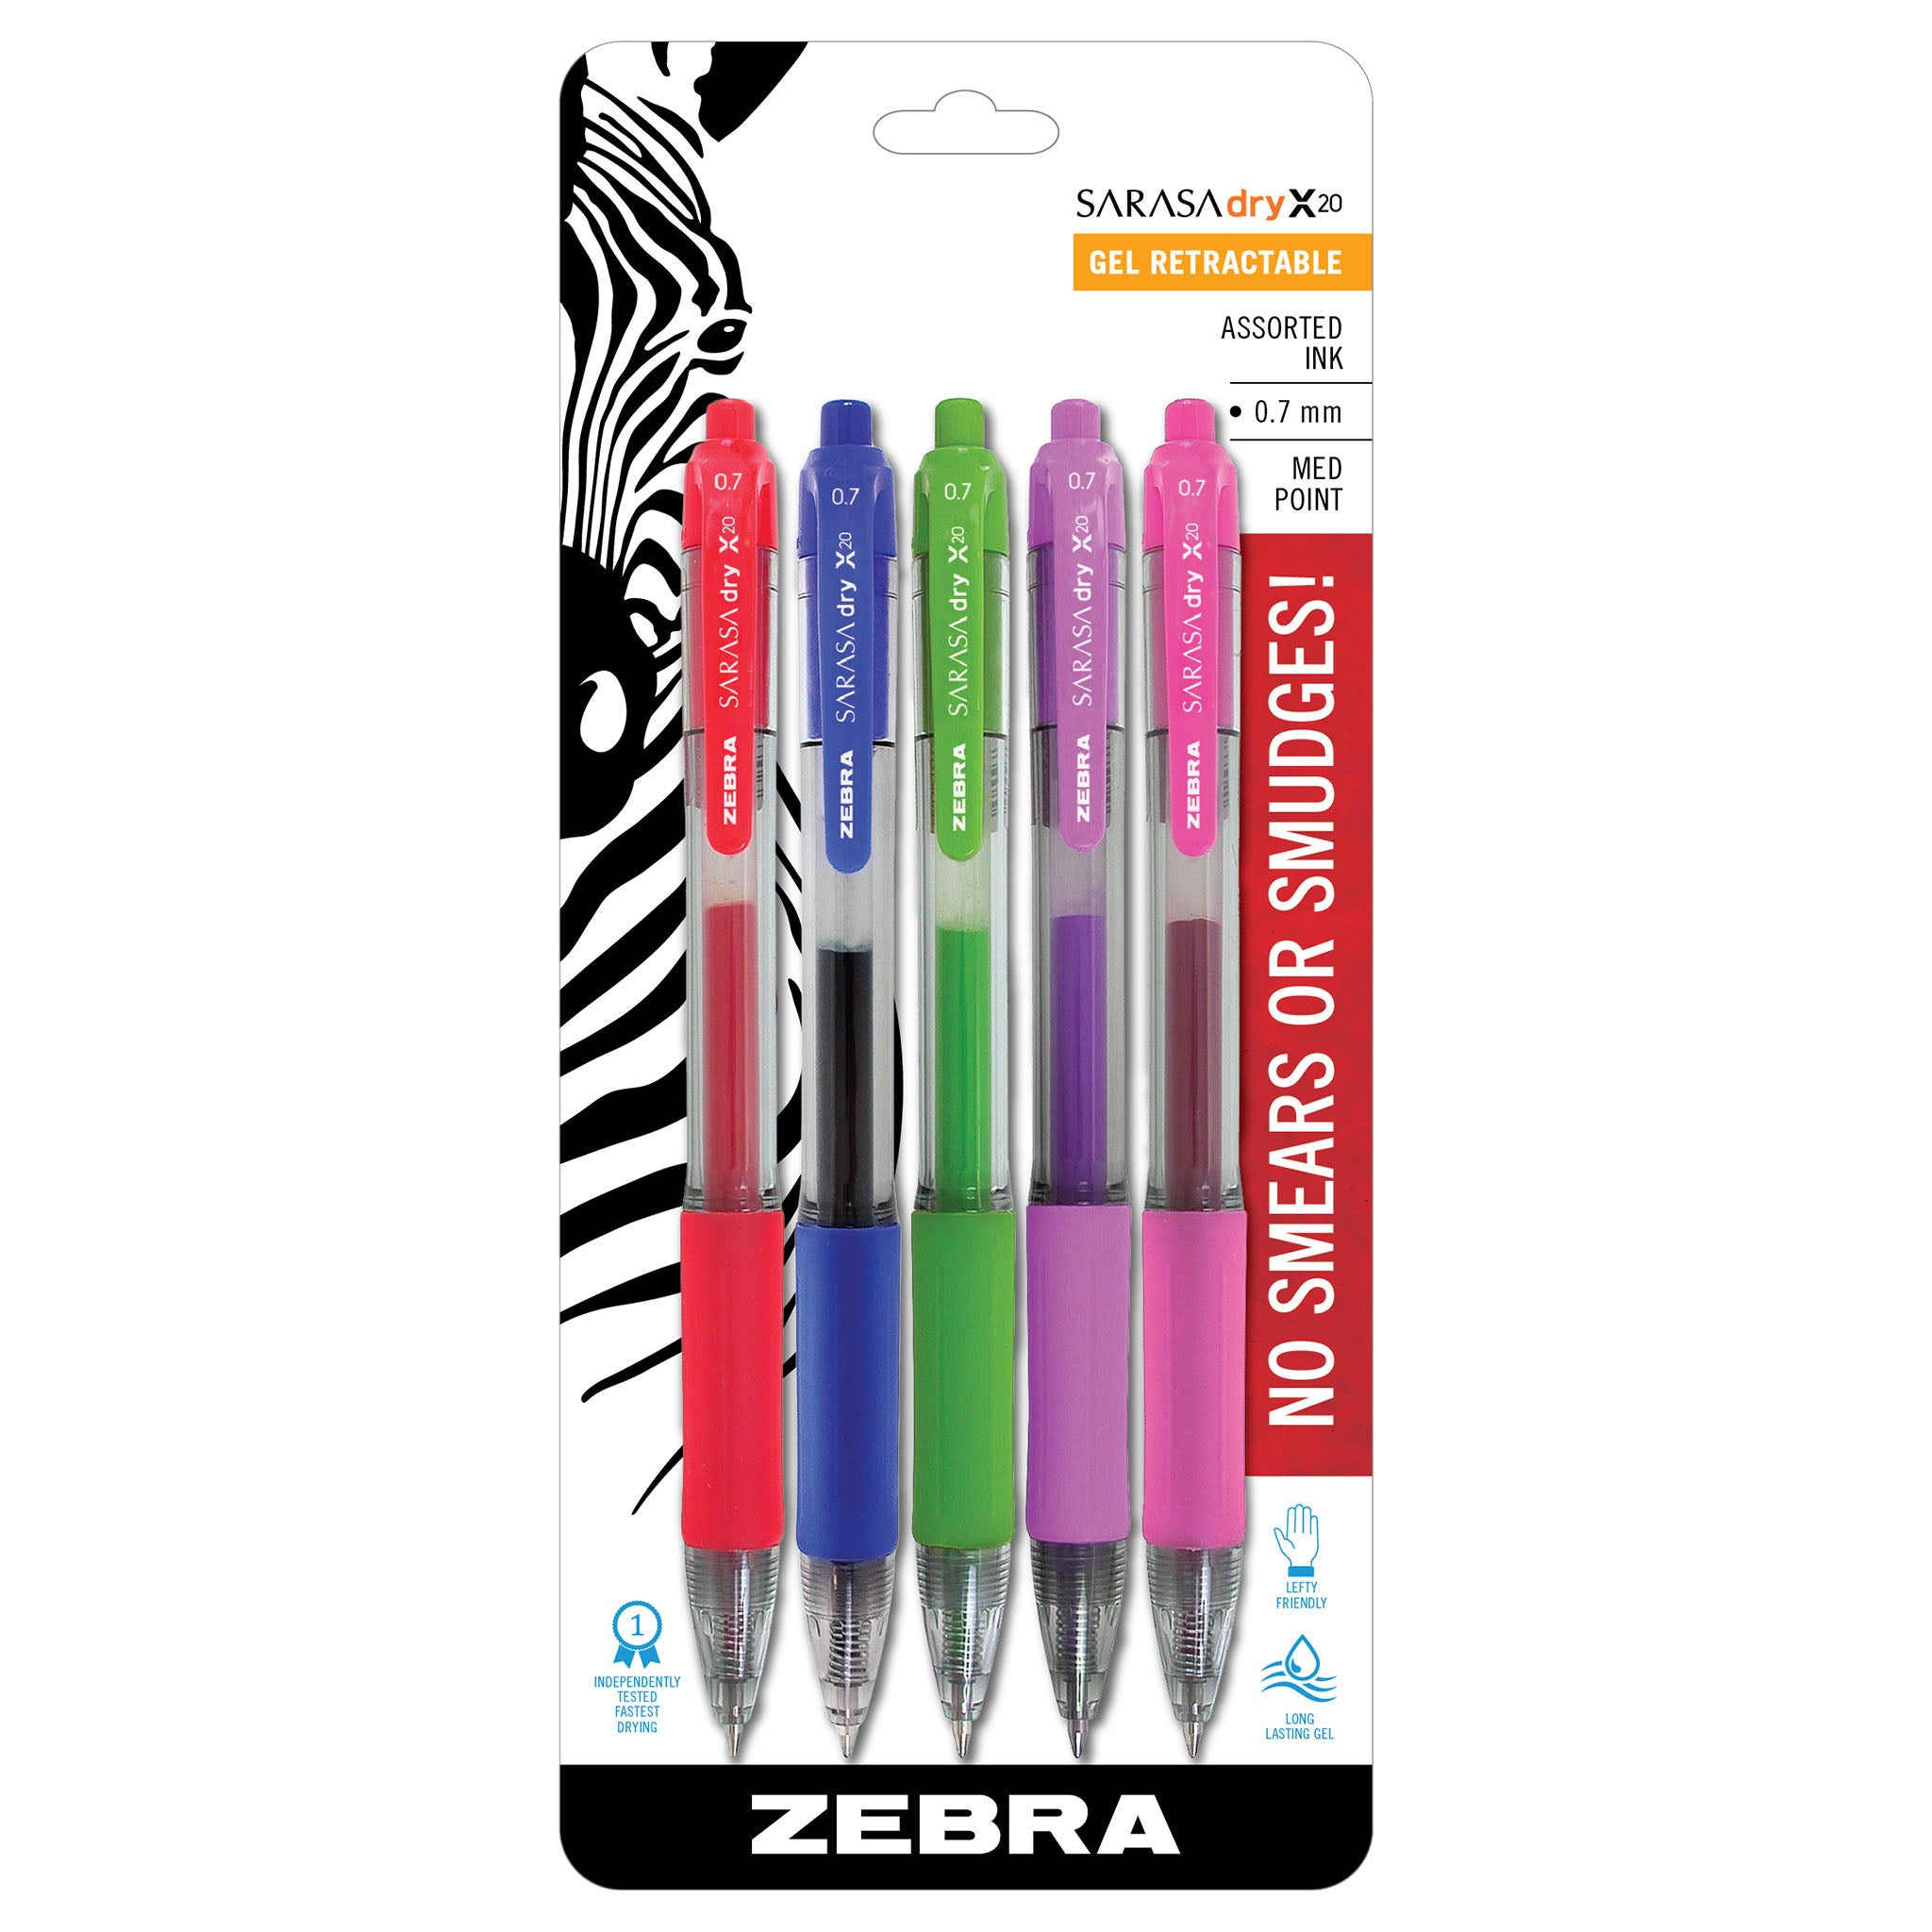  favide 22 Pack 0.5mm 6-in-1 Multicolor Ballpoint Pen